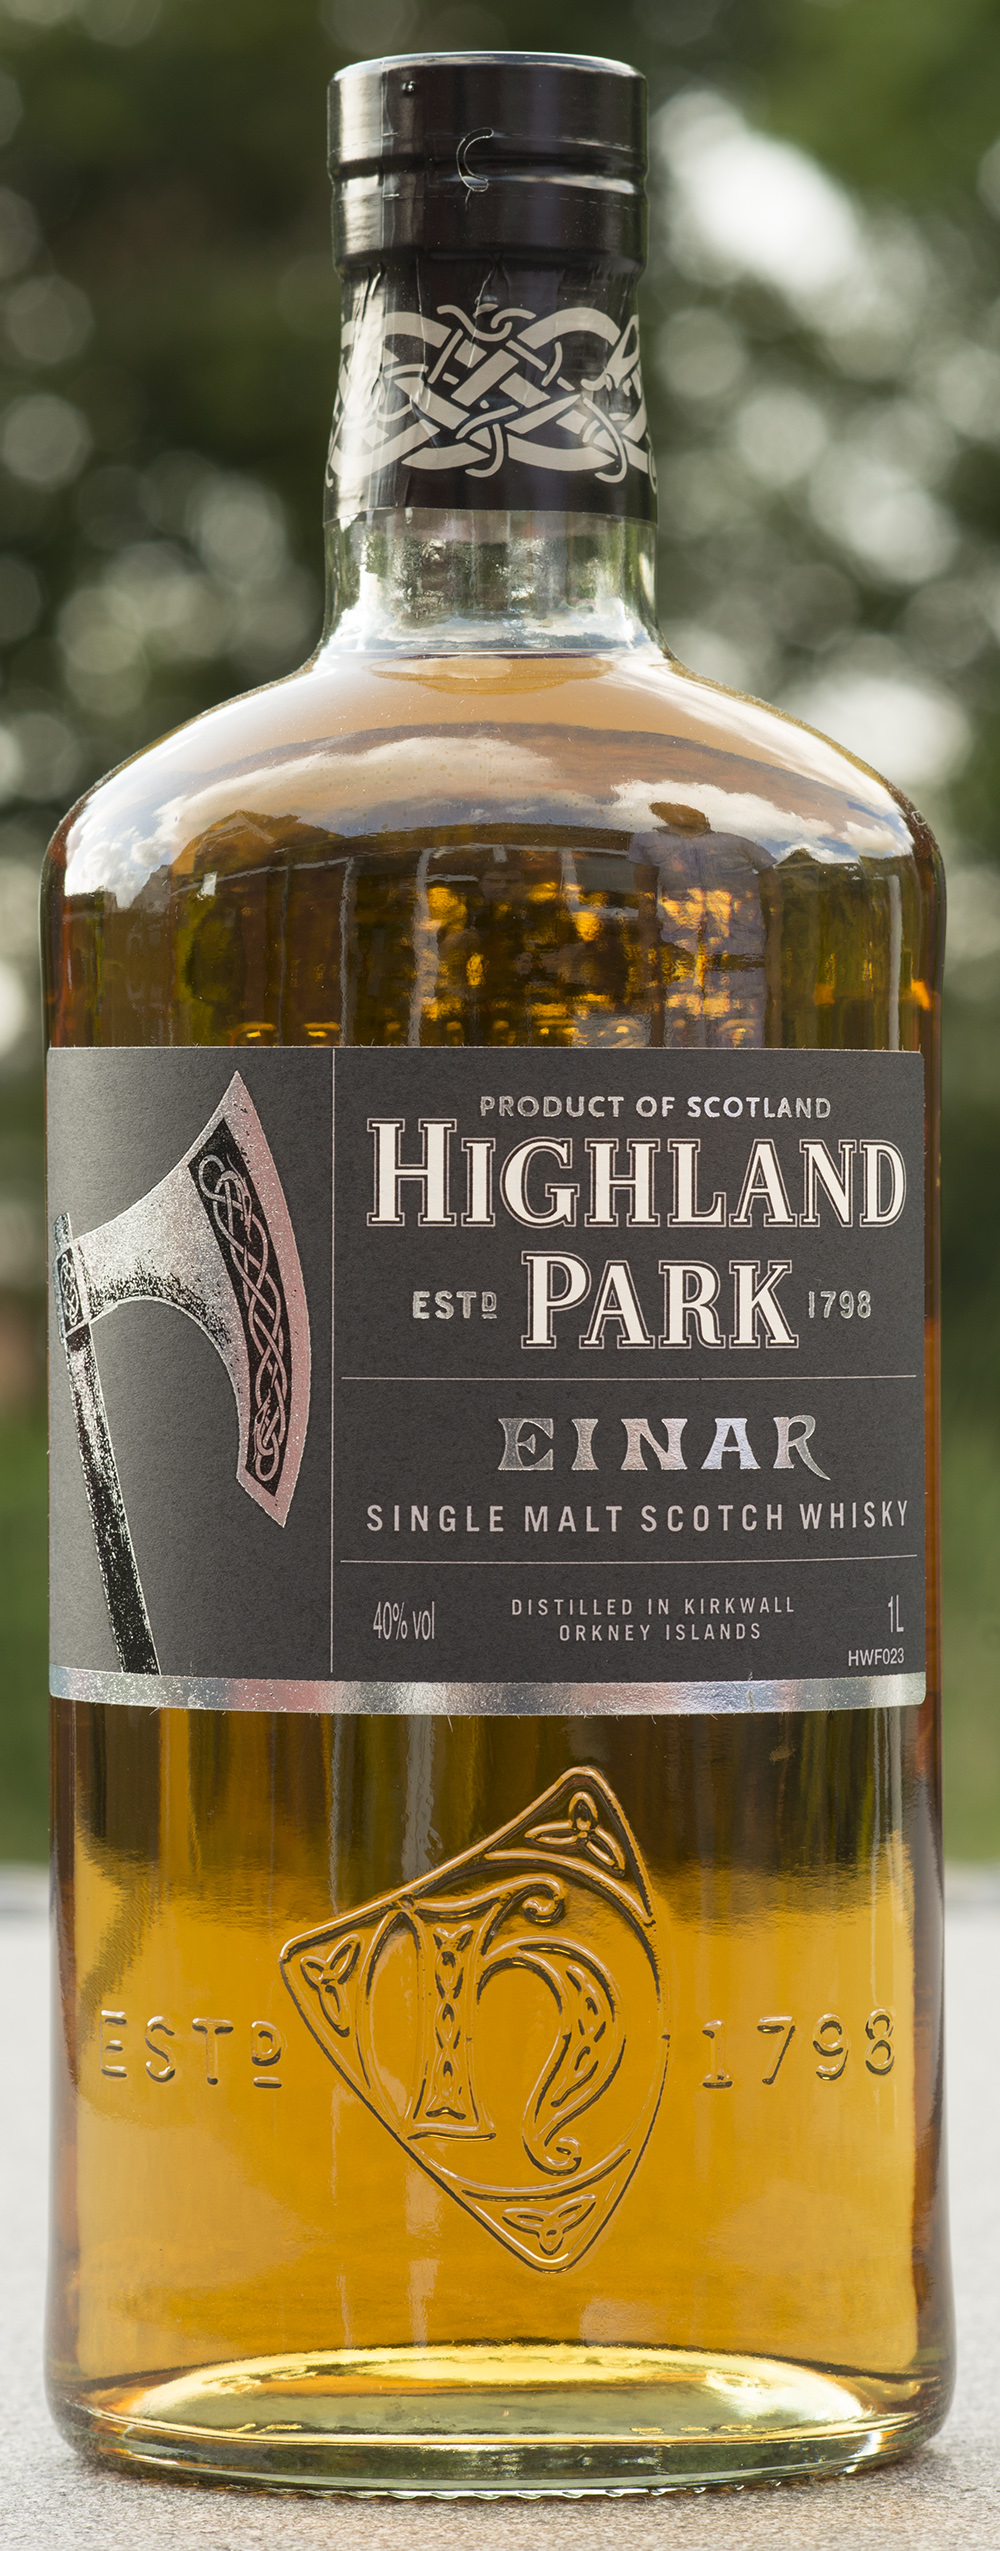 Billede: DSC_3332 Highland Park - Einar - bottle front.jpg